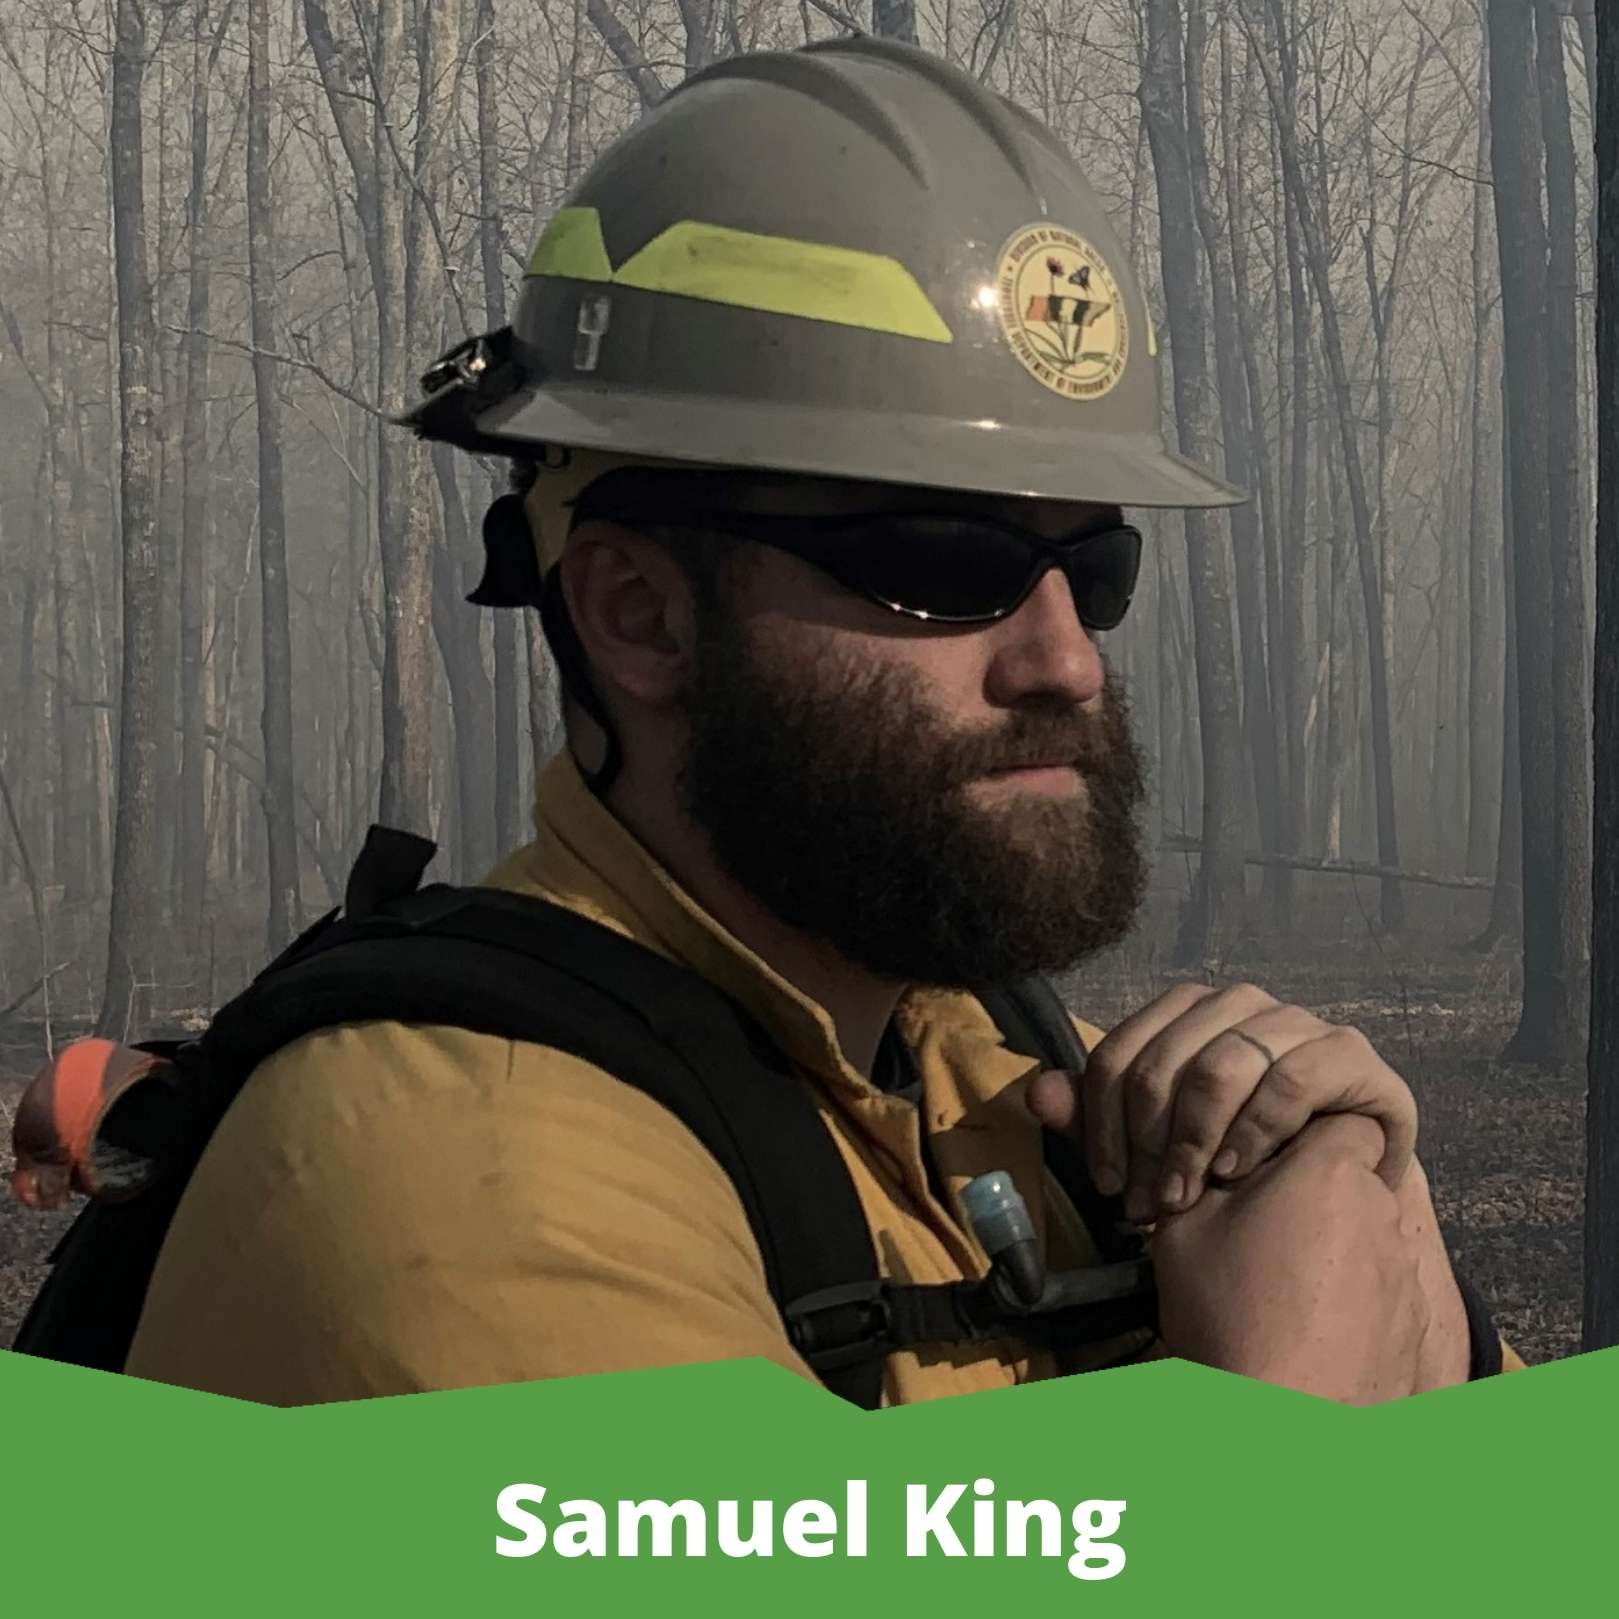 Samuel King wearing helmet and sunglasses.